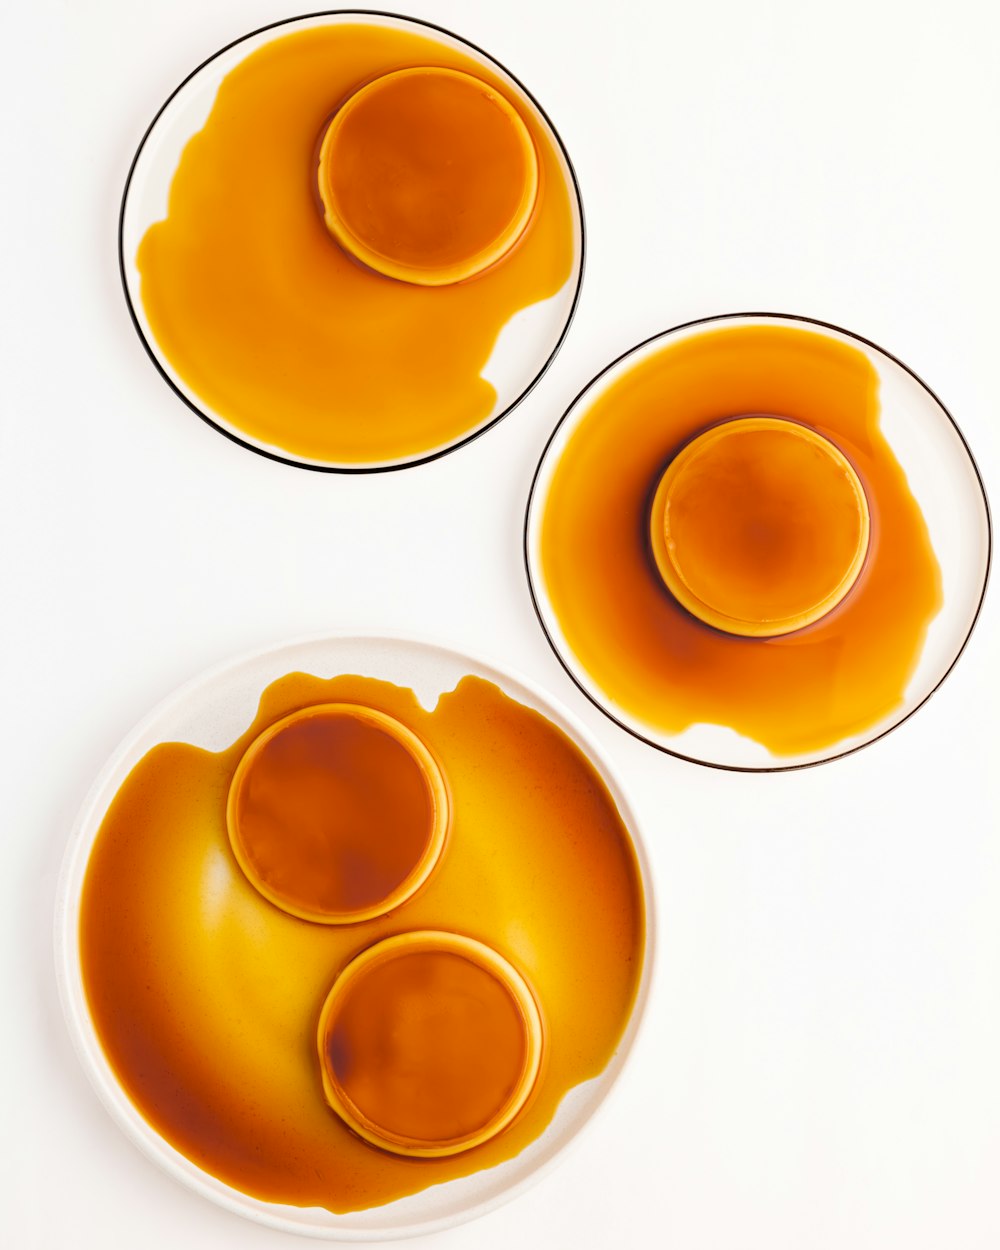 three plates of orange sauce on a white table